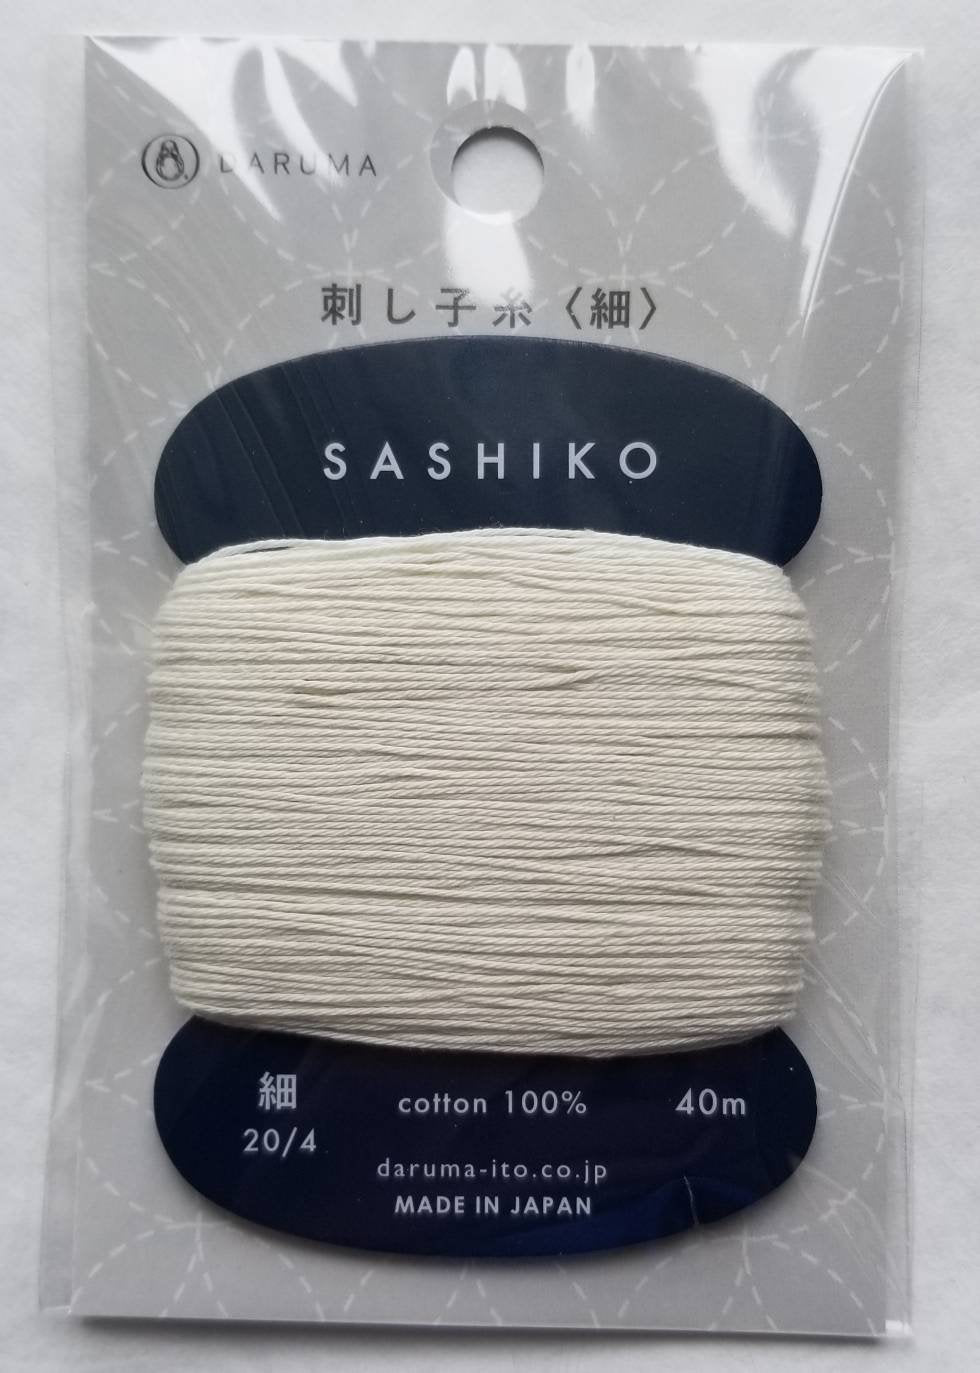 Daruma #202 ECRU Japanese Cotton SASHIKO thread 40 meter skein 20/4 きなり natural beige